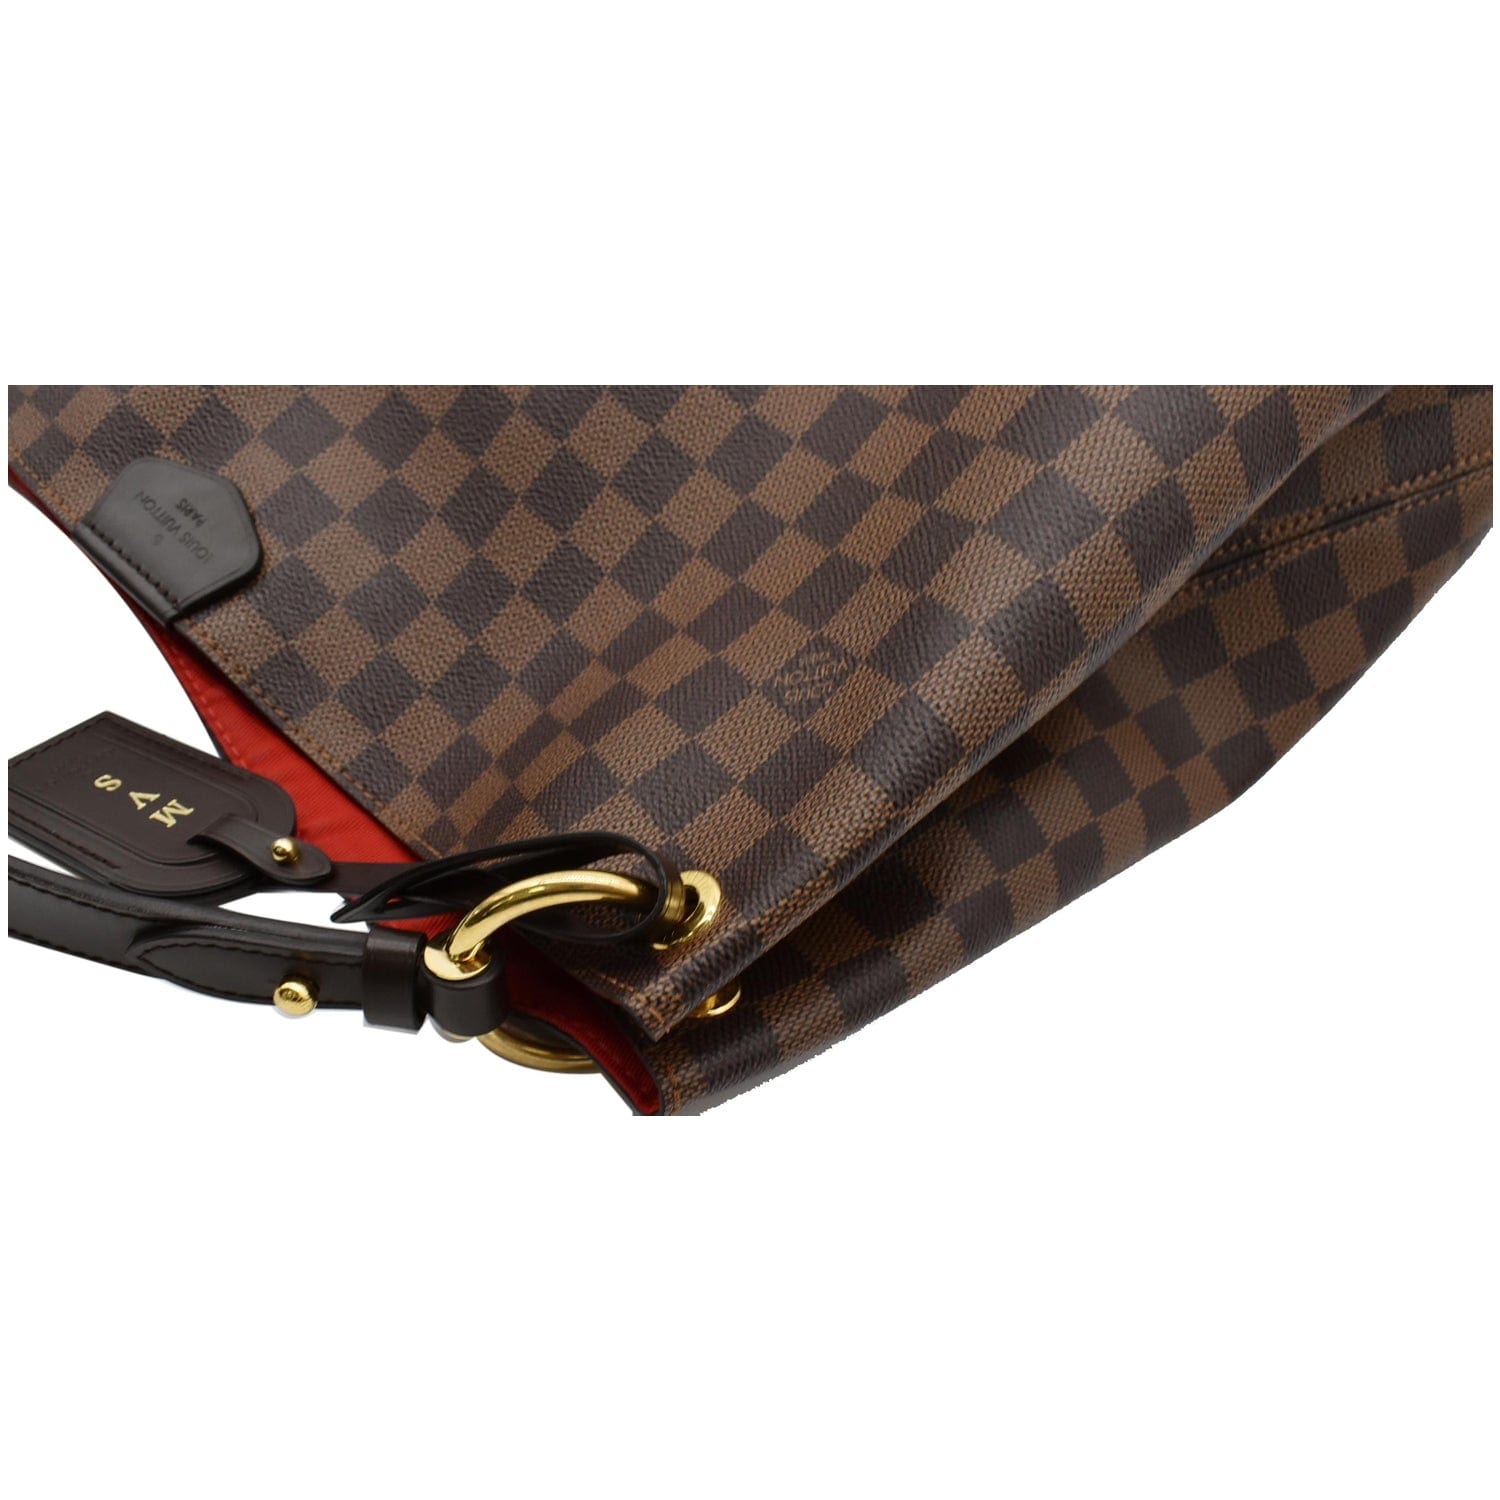 Louis Vuitton Graceful PM Shoulder Bag in Brown Damier Ebene Canvas